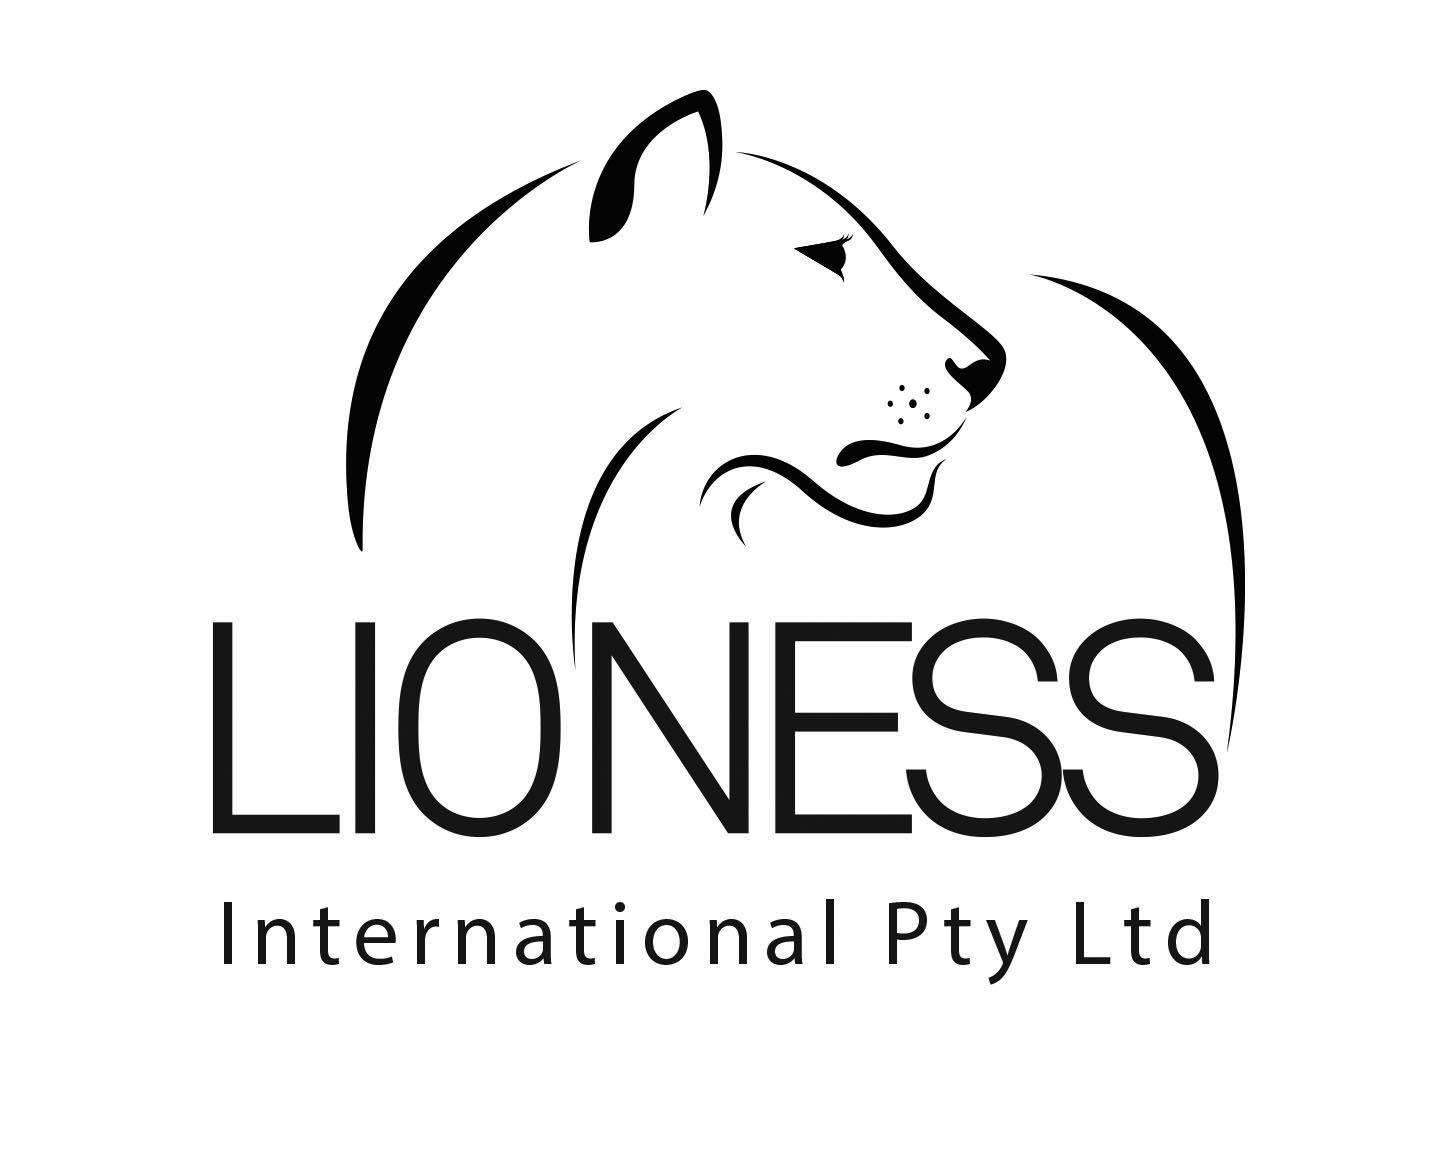 Lioness Logo - Feminine, Bold Logo Design for Lioness International Pty Ltd with